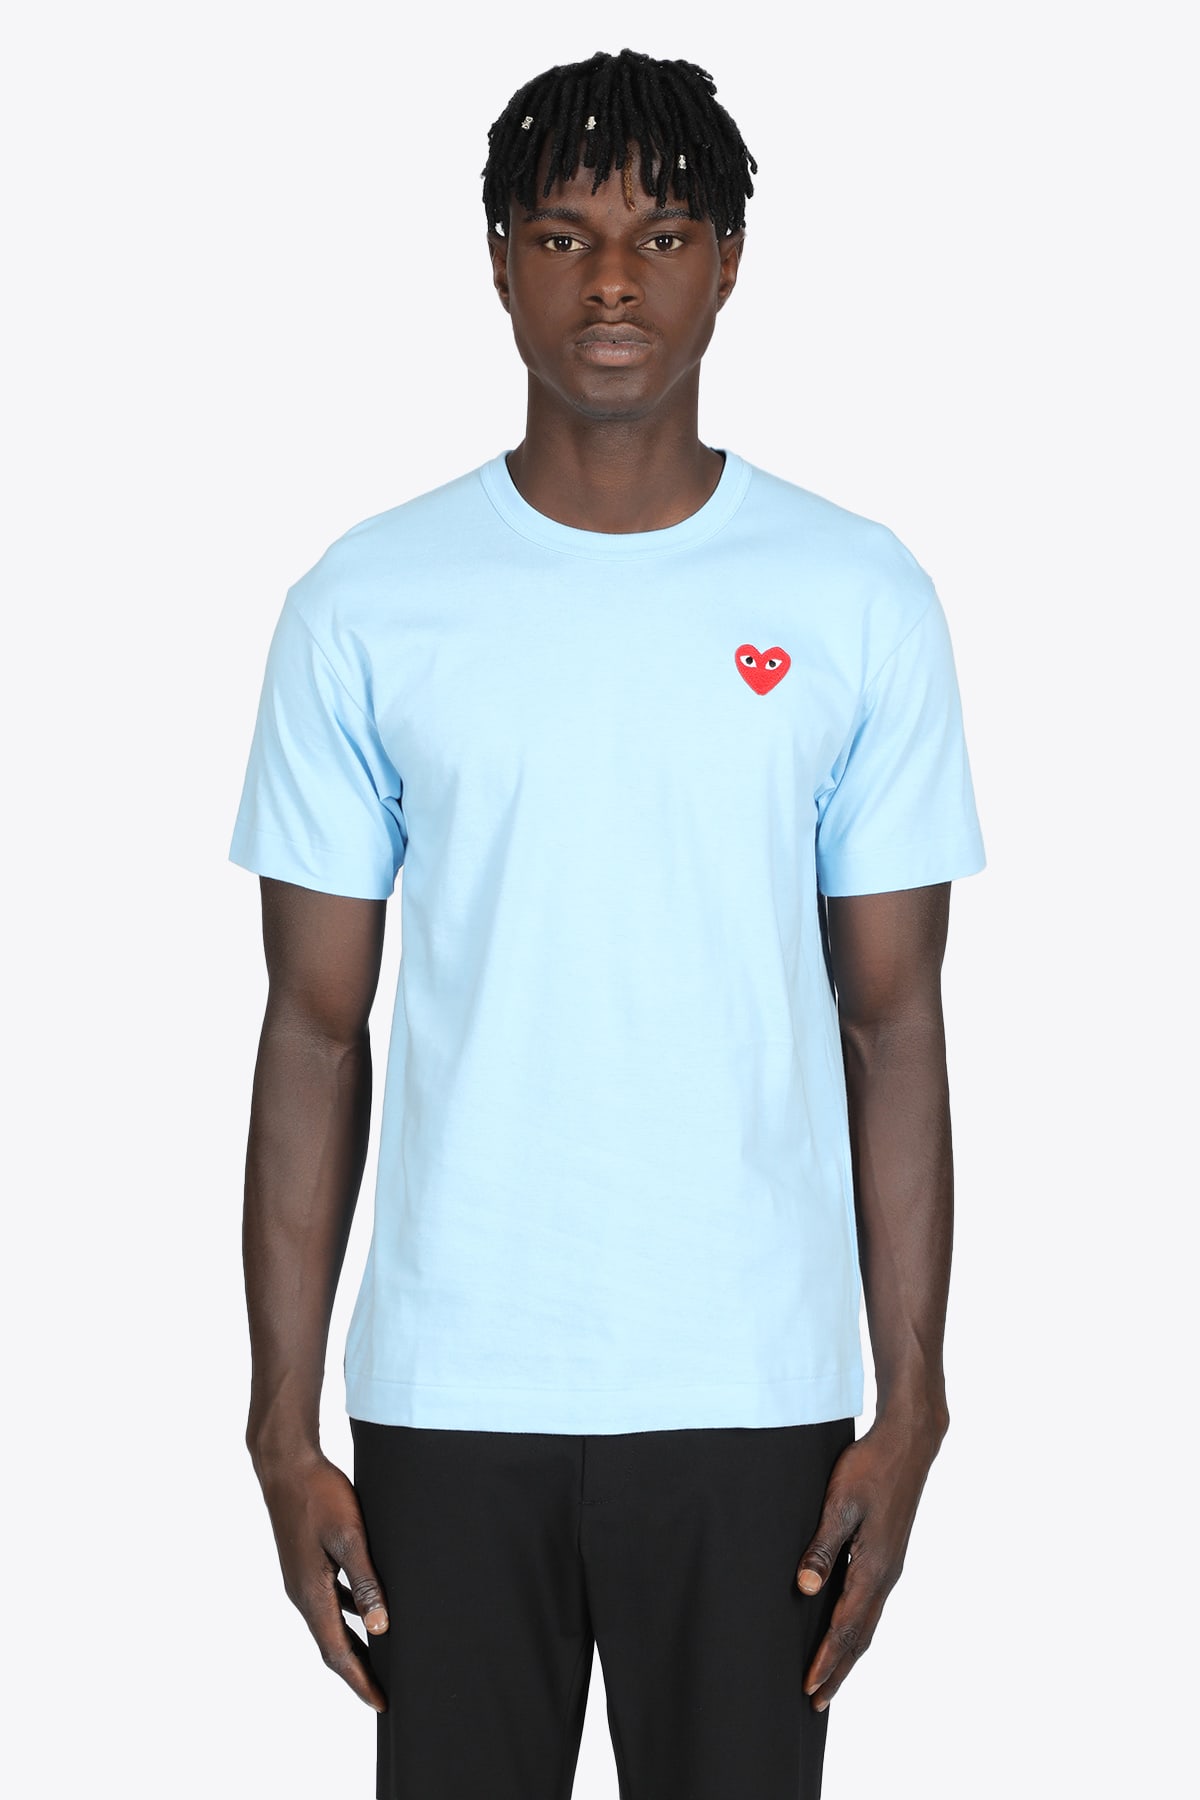 Comme des Garçons Play Heart Patch T-shirt Baby blue cotton t-shirt with big heart patch